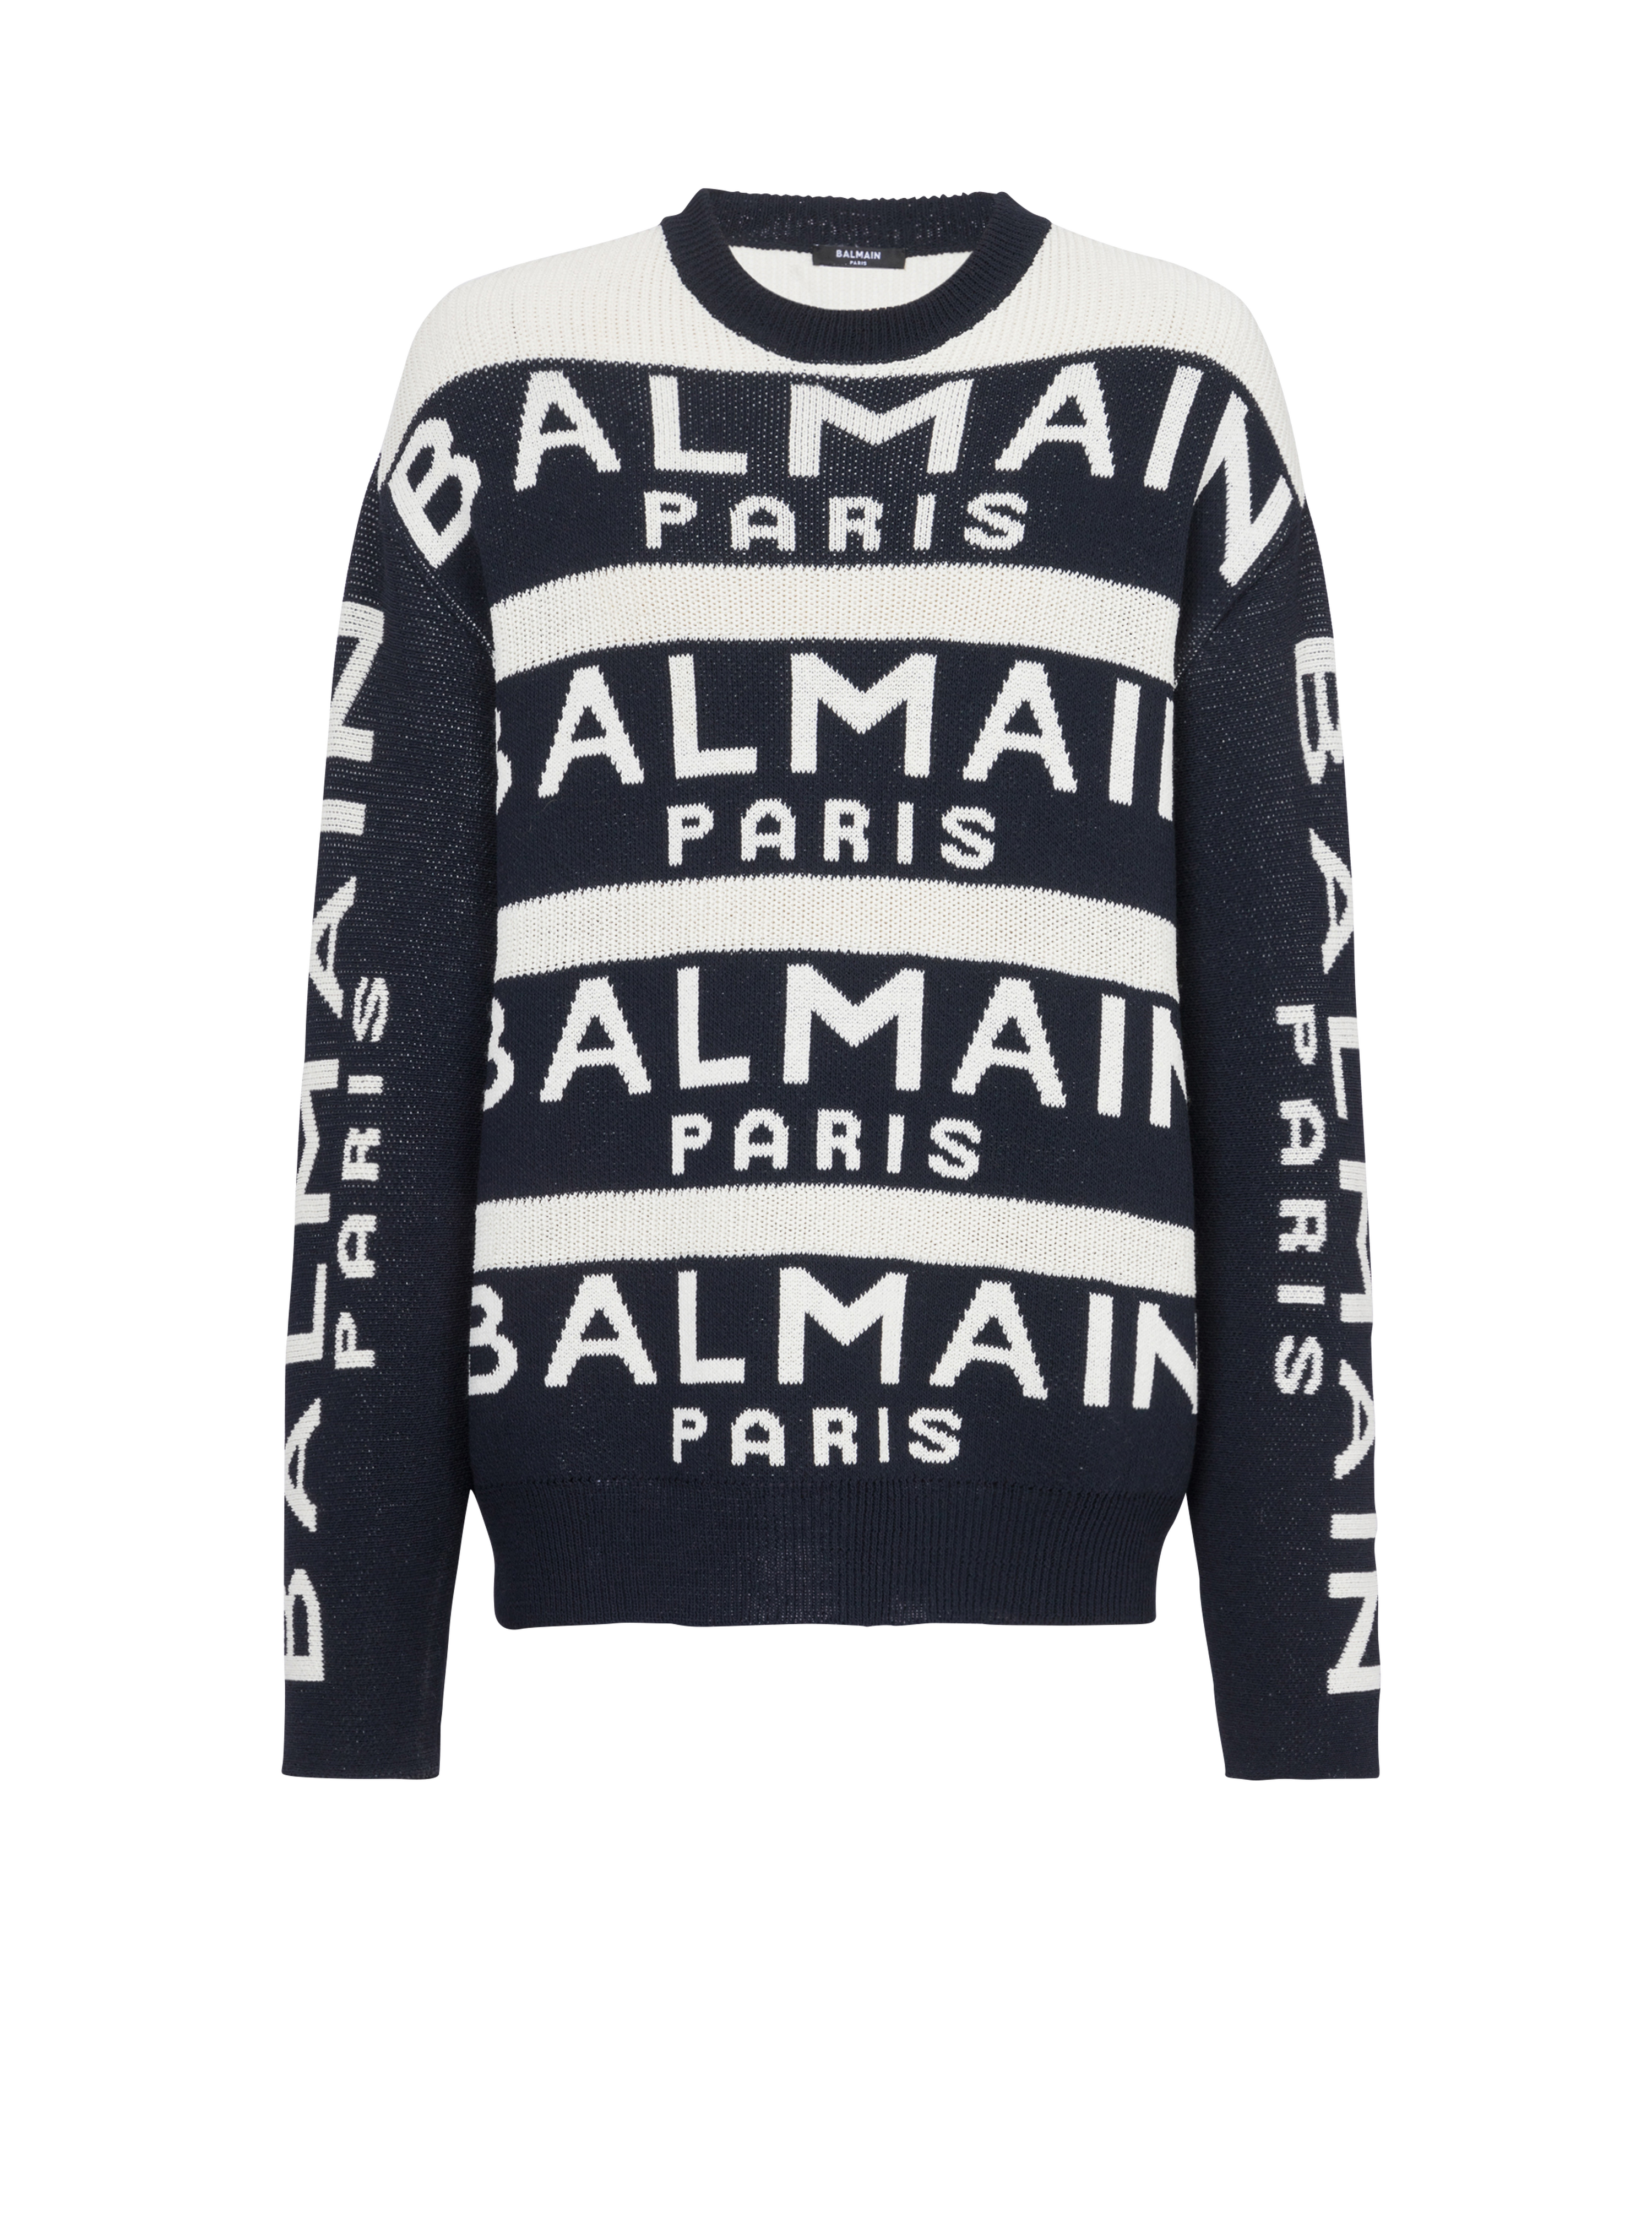 Sweater embroidered with Balmain Paris logo, black